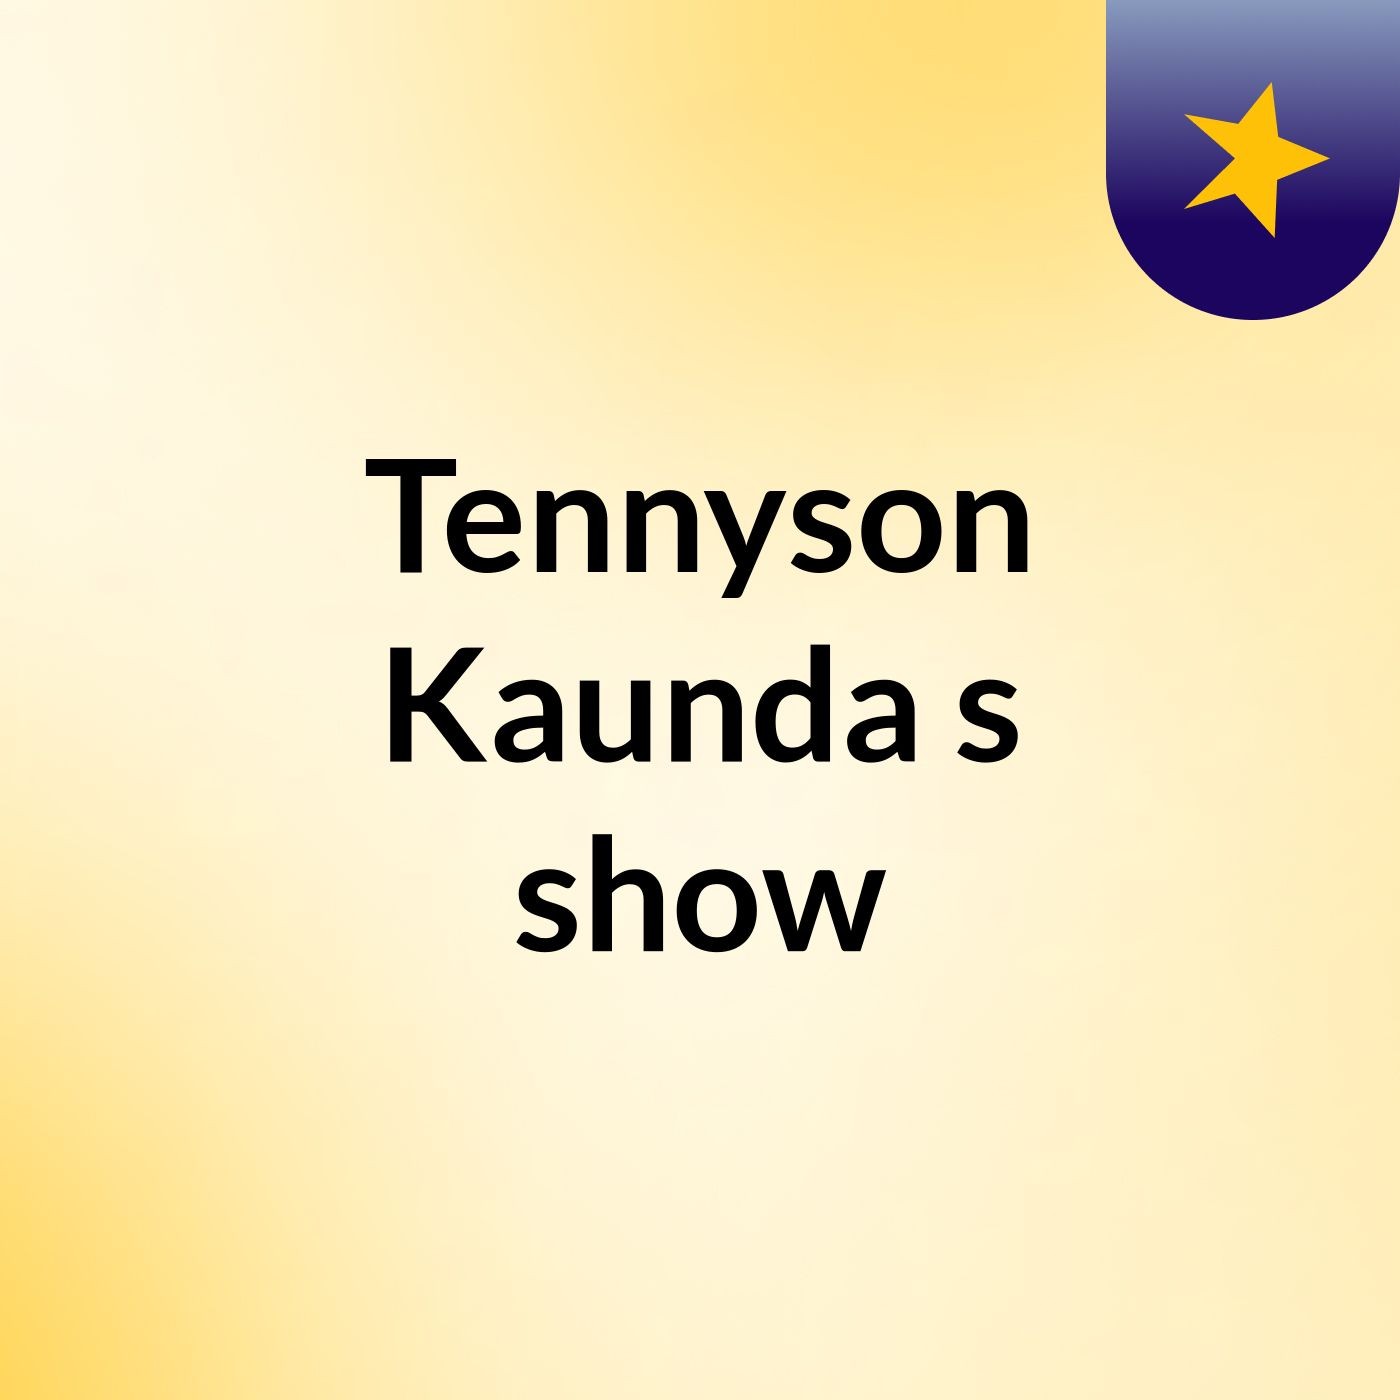 Tennyson Kaunda's show